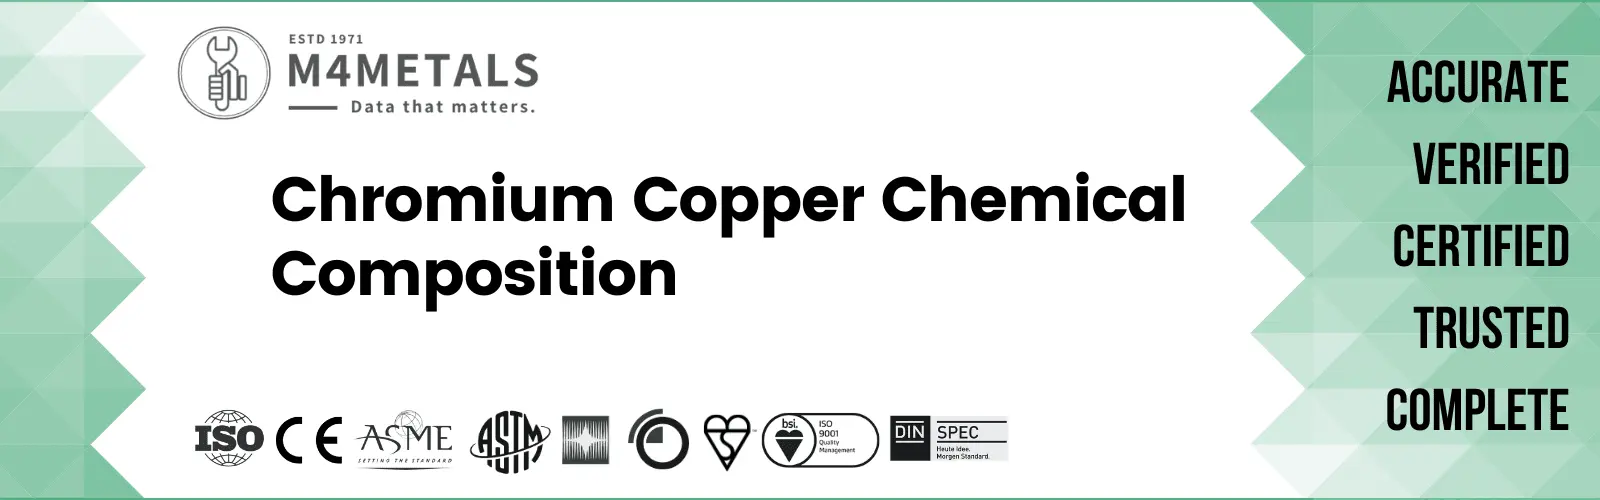 Chromium Copper Chemical Composition